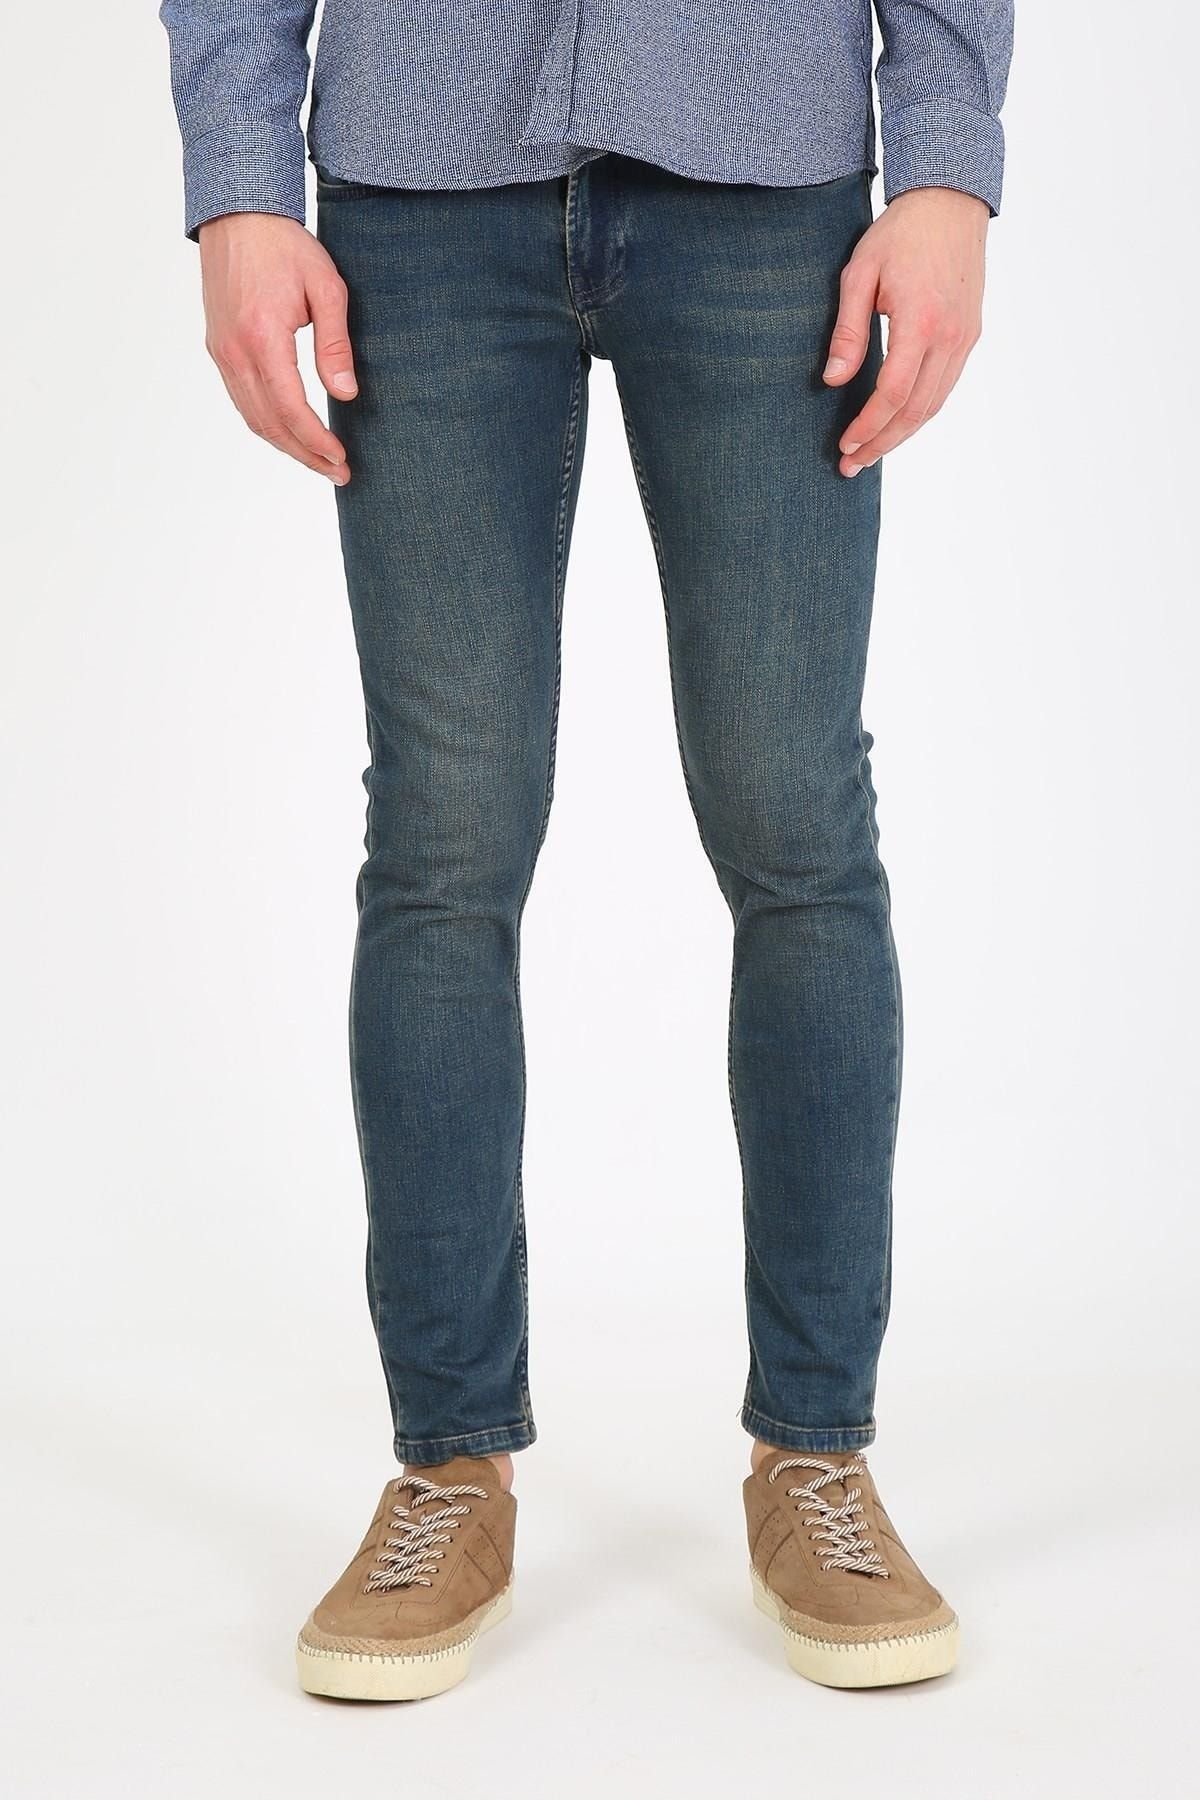 Twister Jeans Erkek Pantolon Panama 627-29 Tint Blue